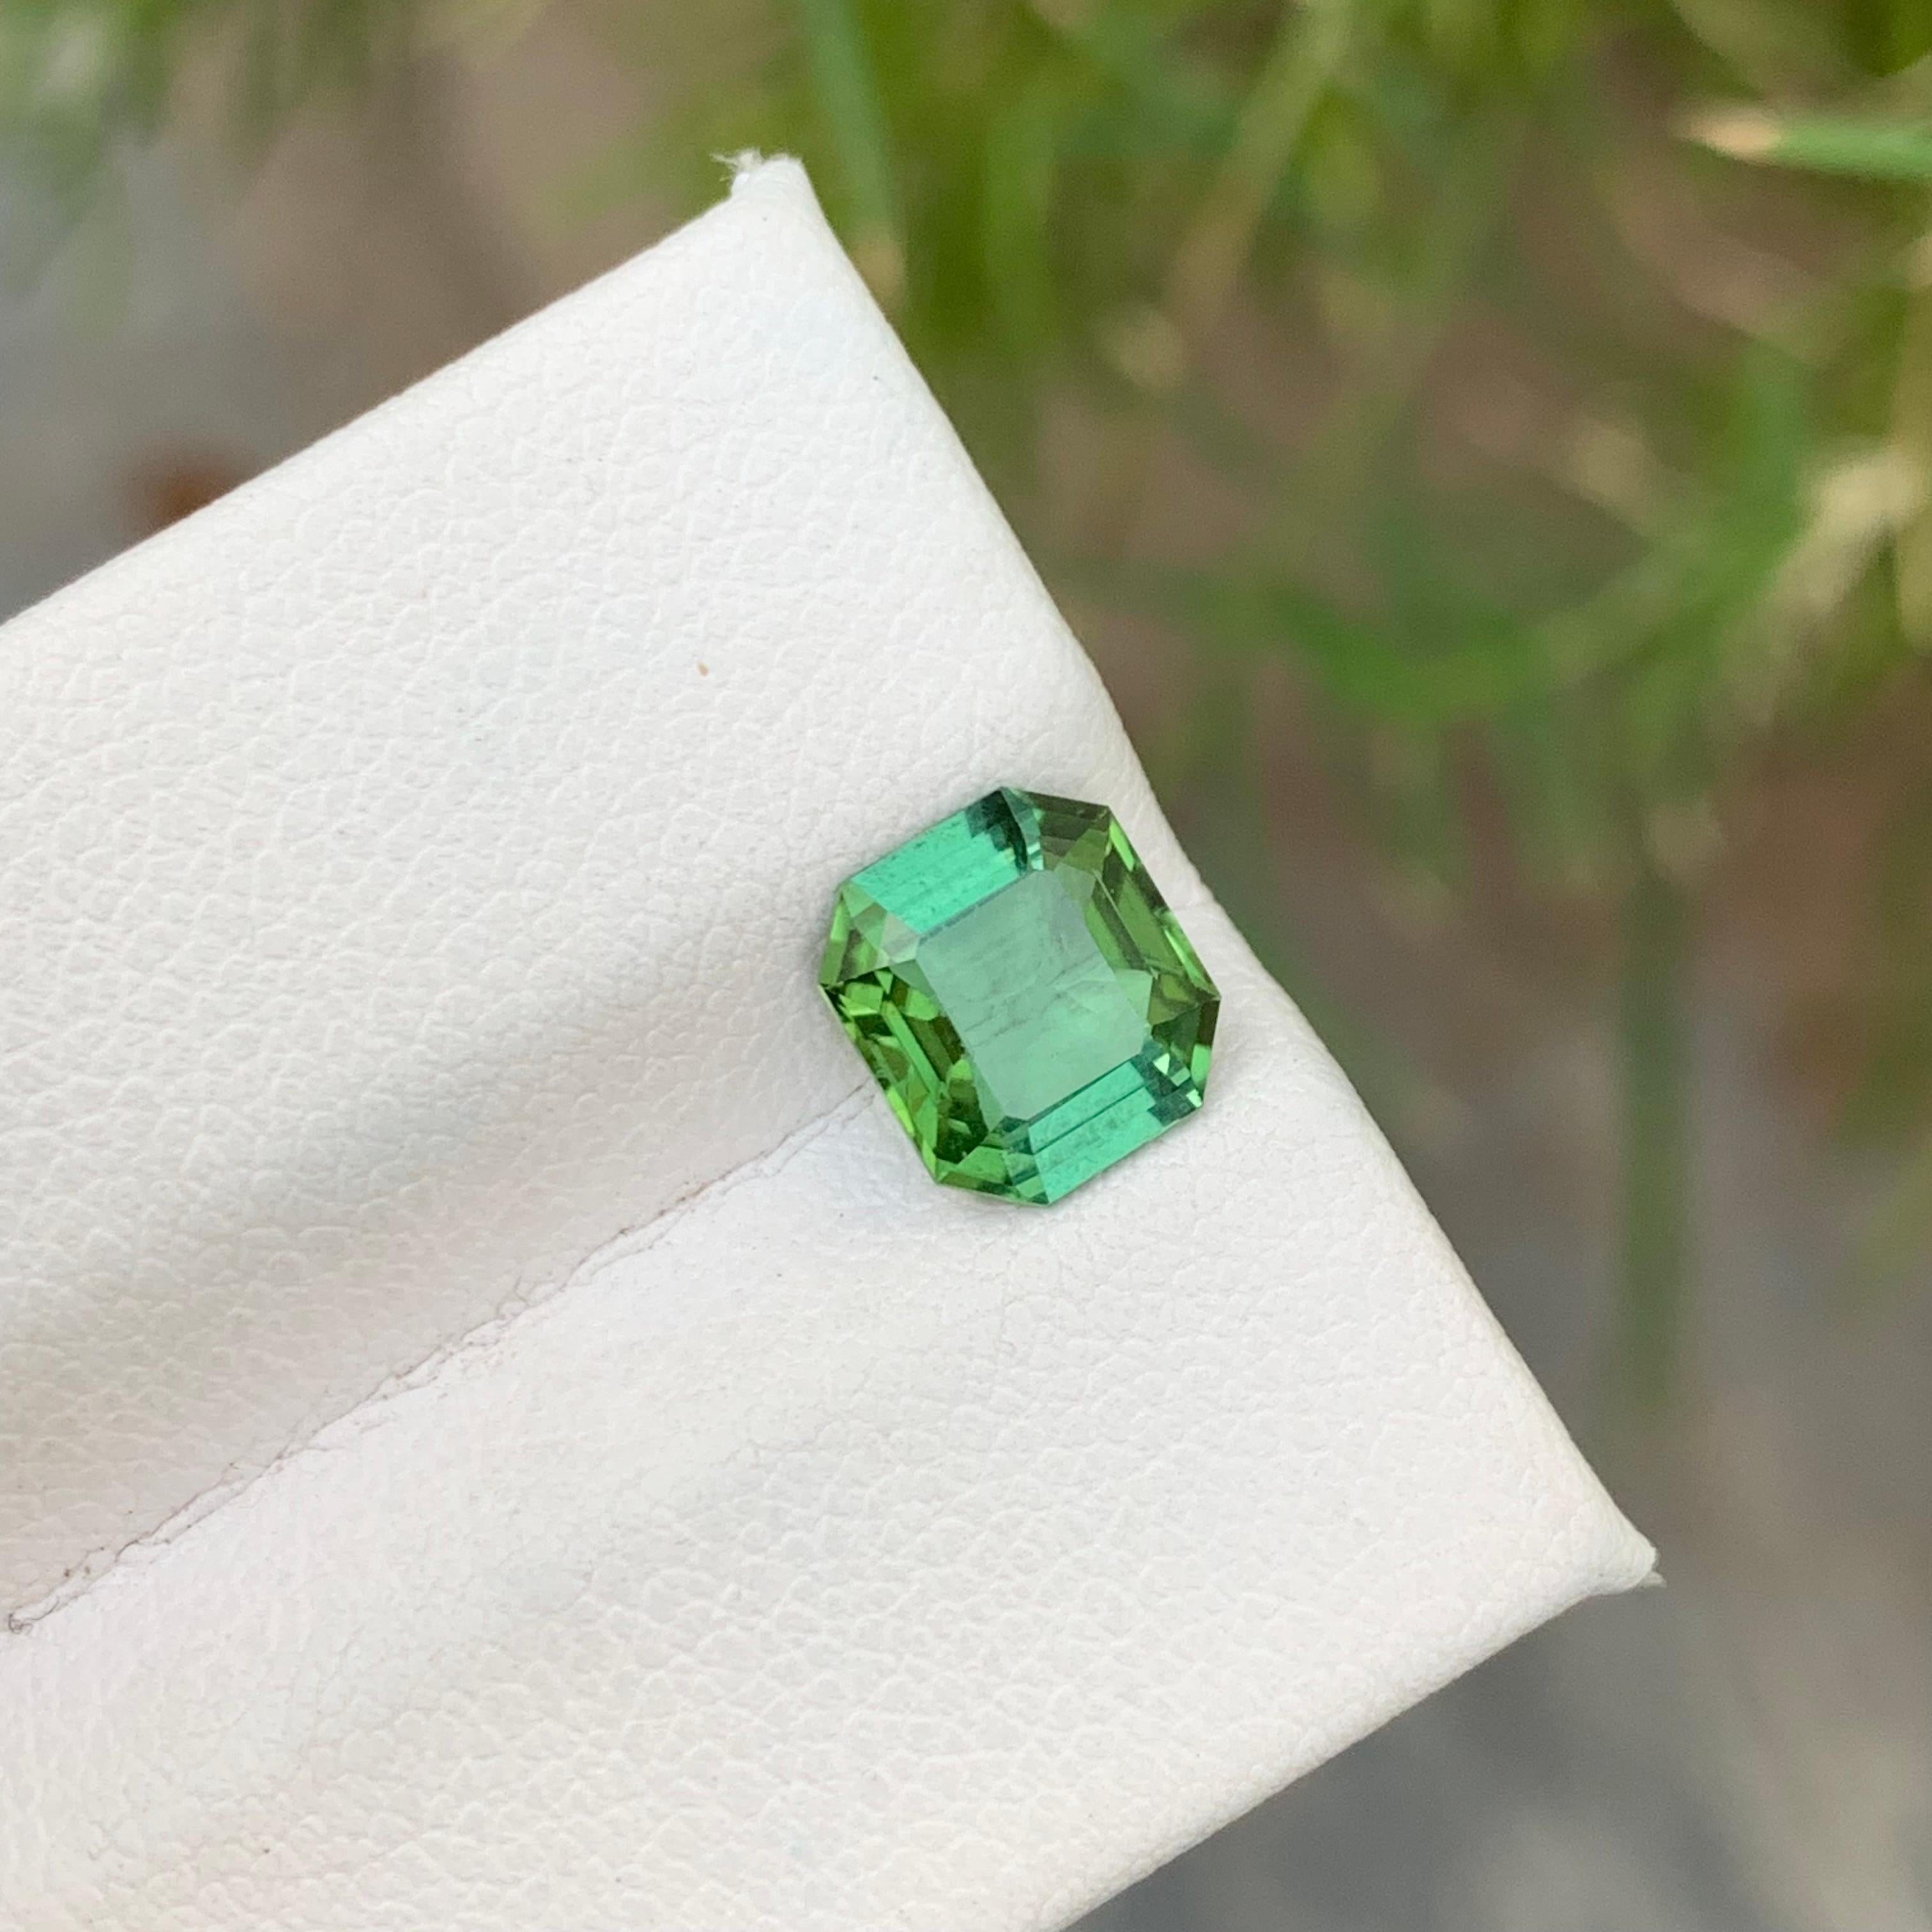 Gorgeous 1.65 Carat Mint Green Tourmaline Emerald Cut Ring Gem from Afghanistan 6